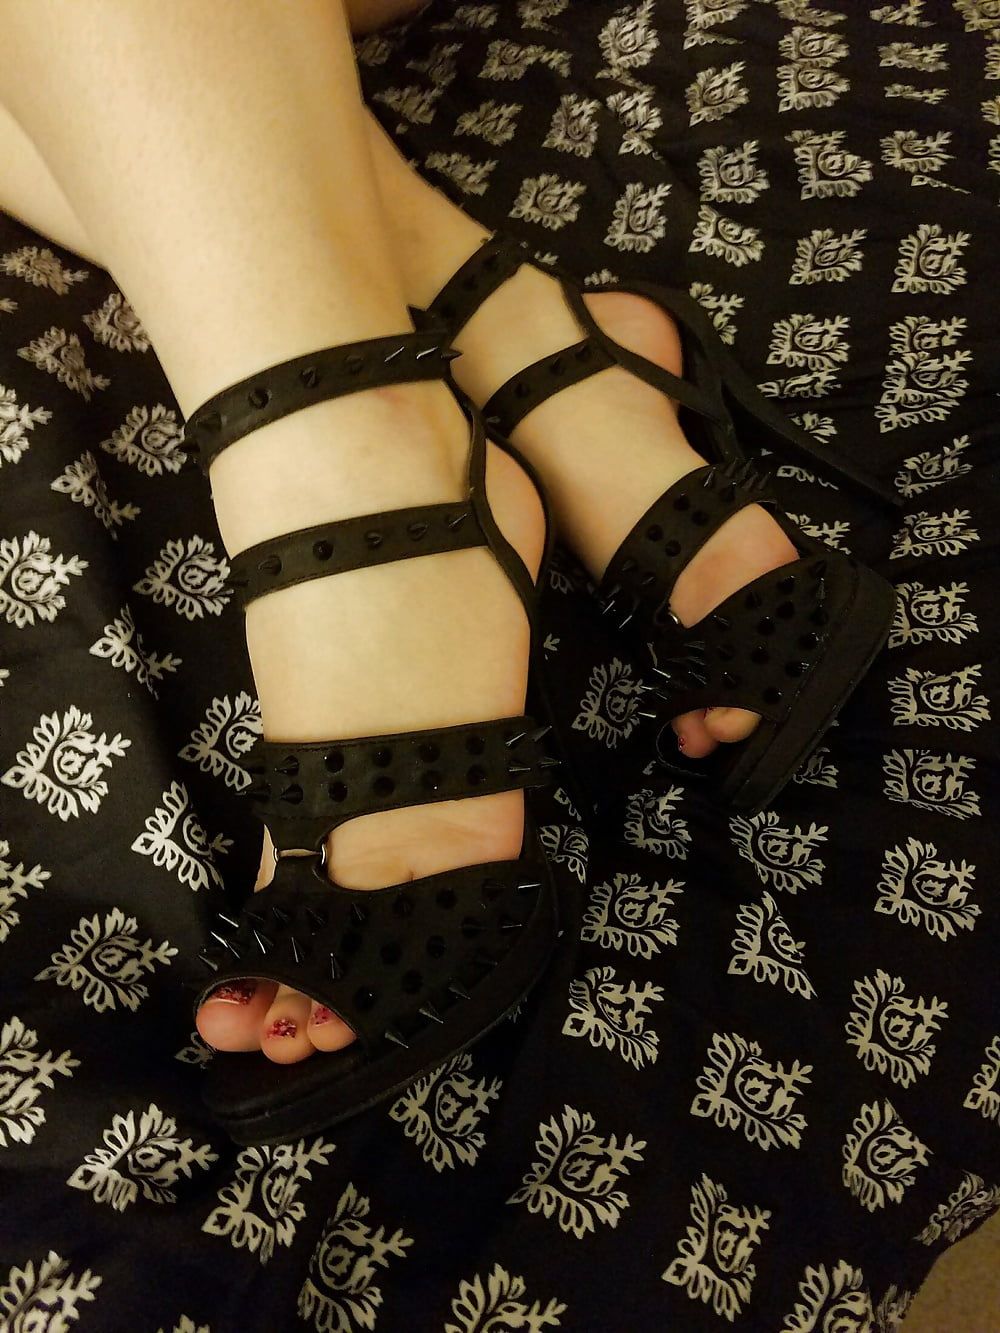 Sexy feet #2